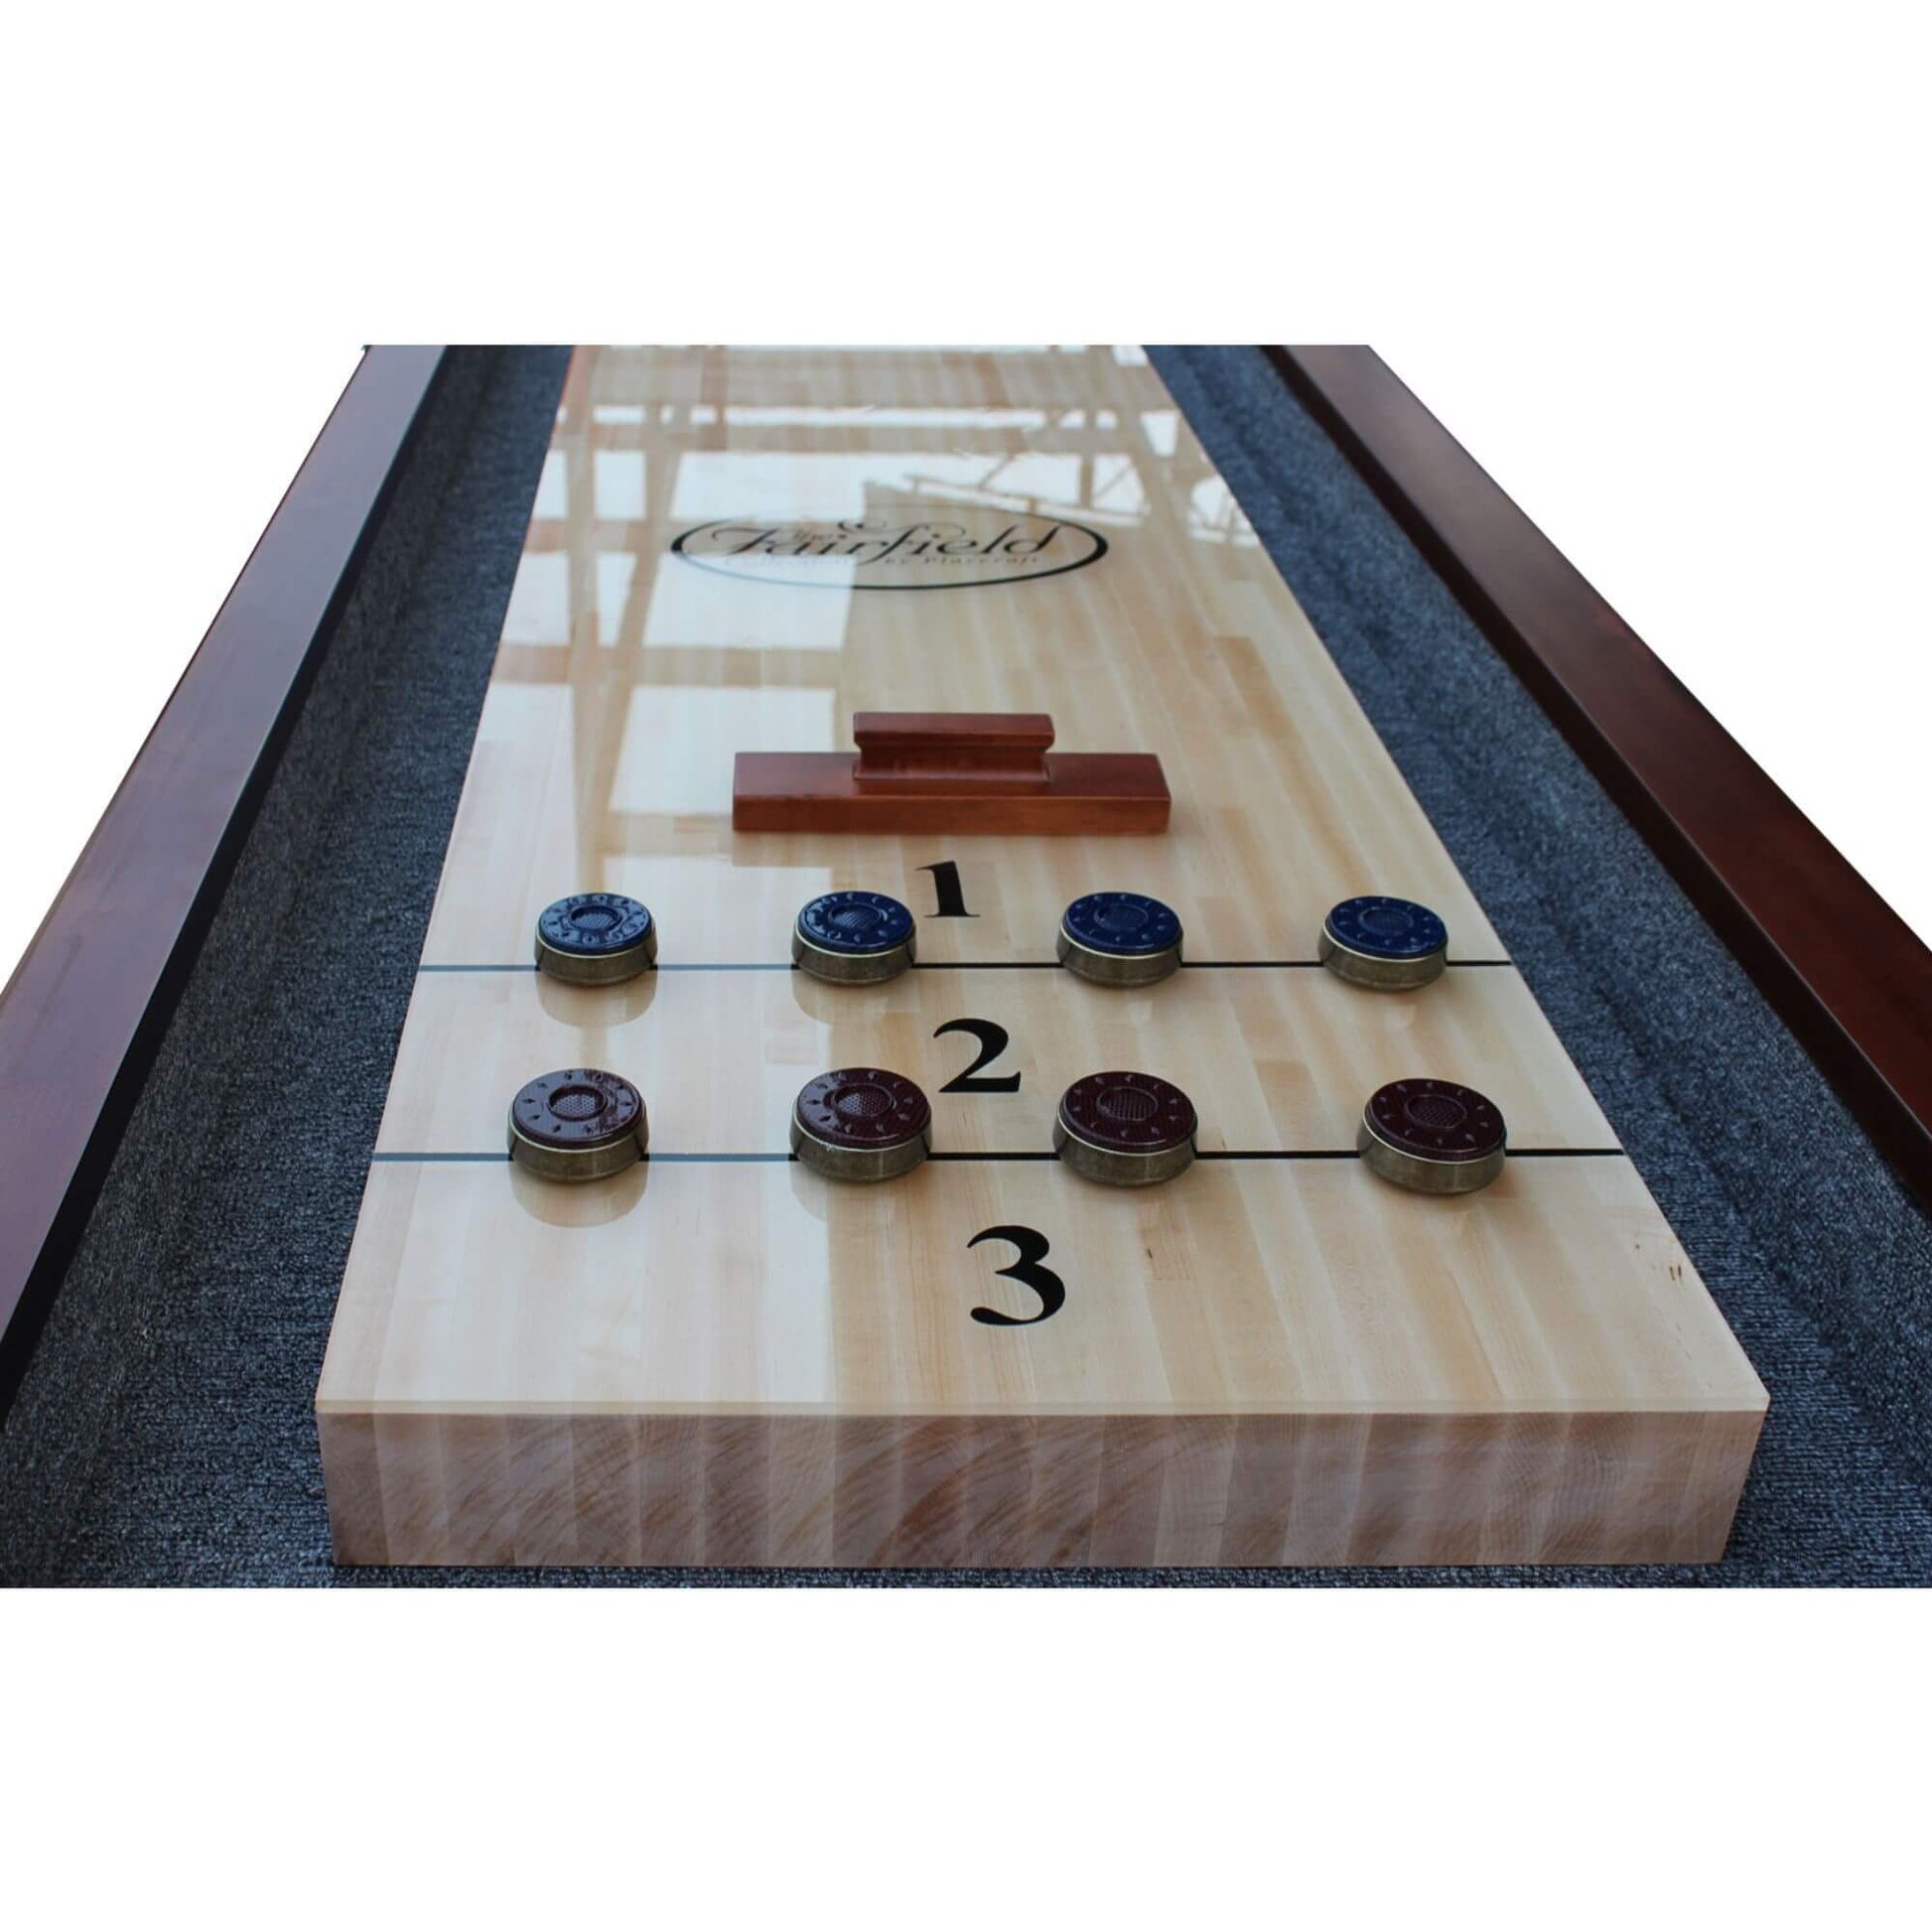 Playcraft St. Lawrence Pro-Series Shuffleboard Table - Upper Livin